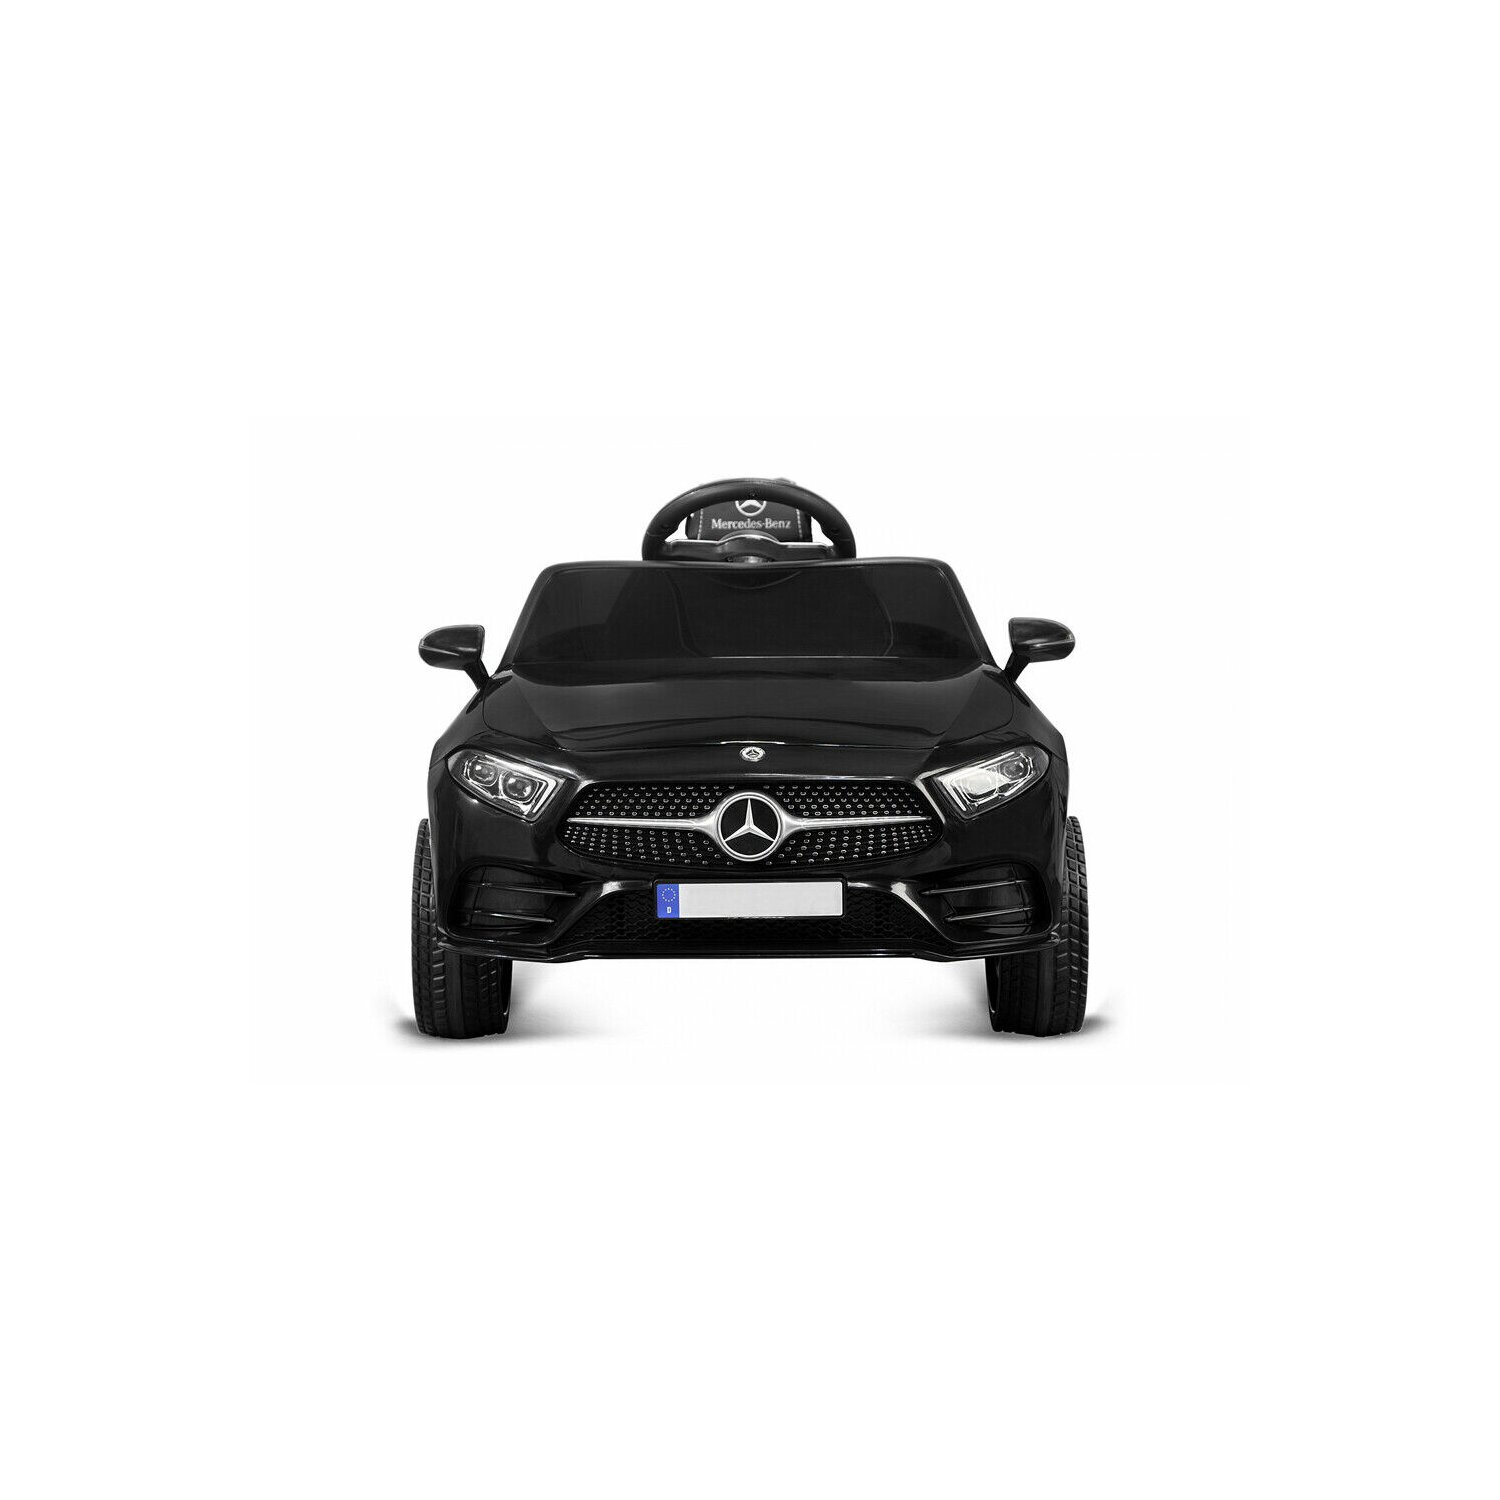 COFI Lizenz Mercedes CLS350 Kinderfahrzeug